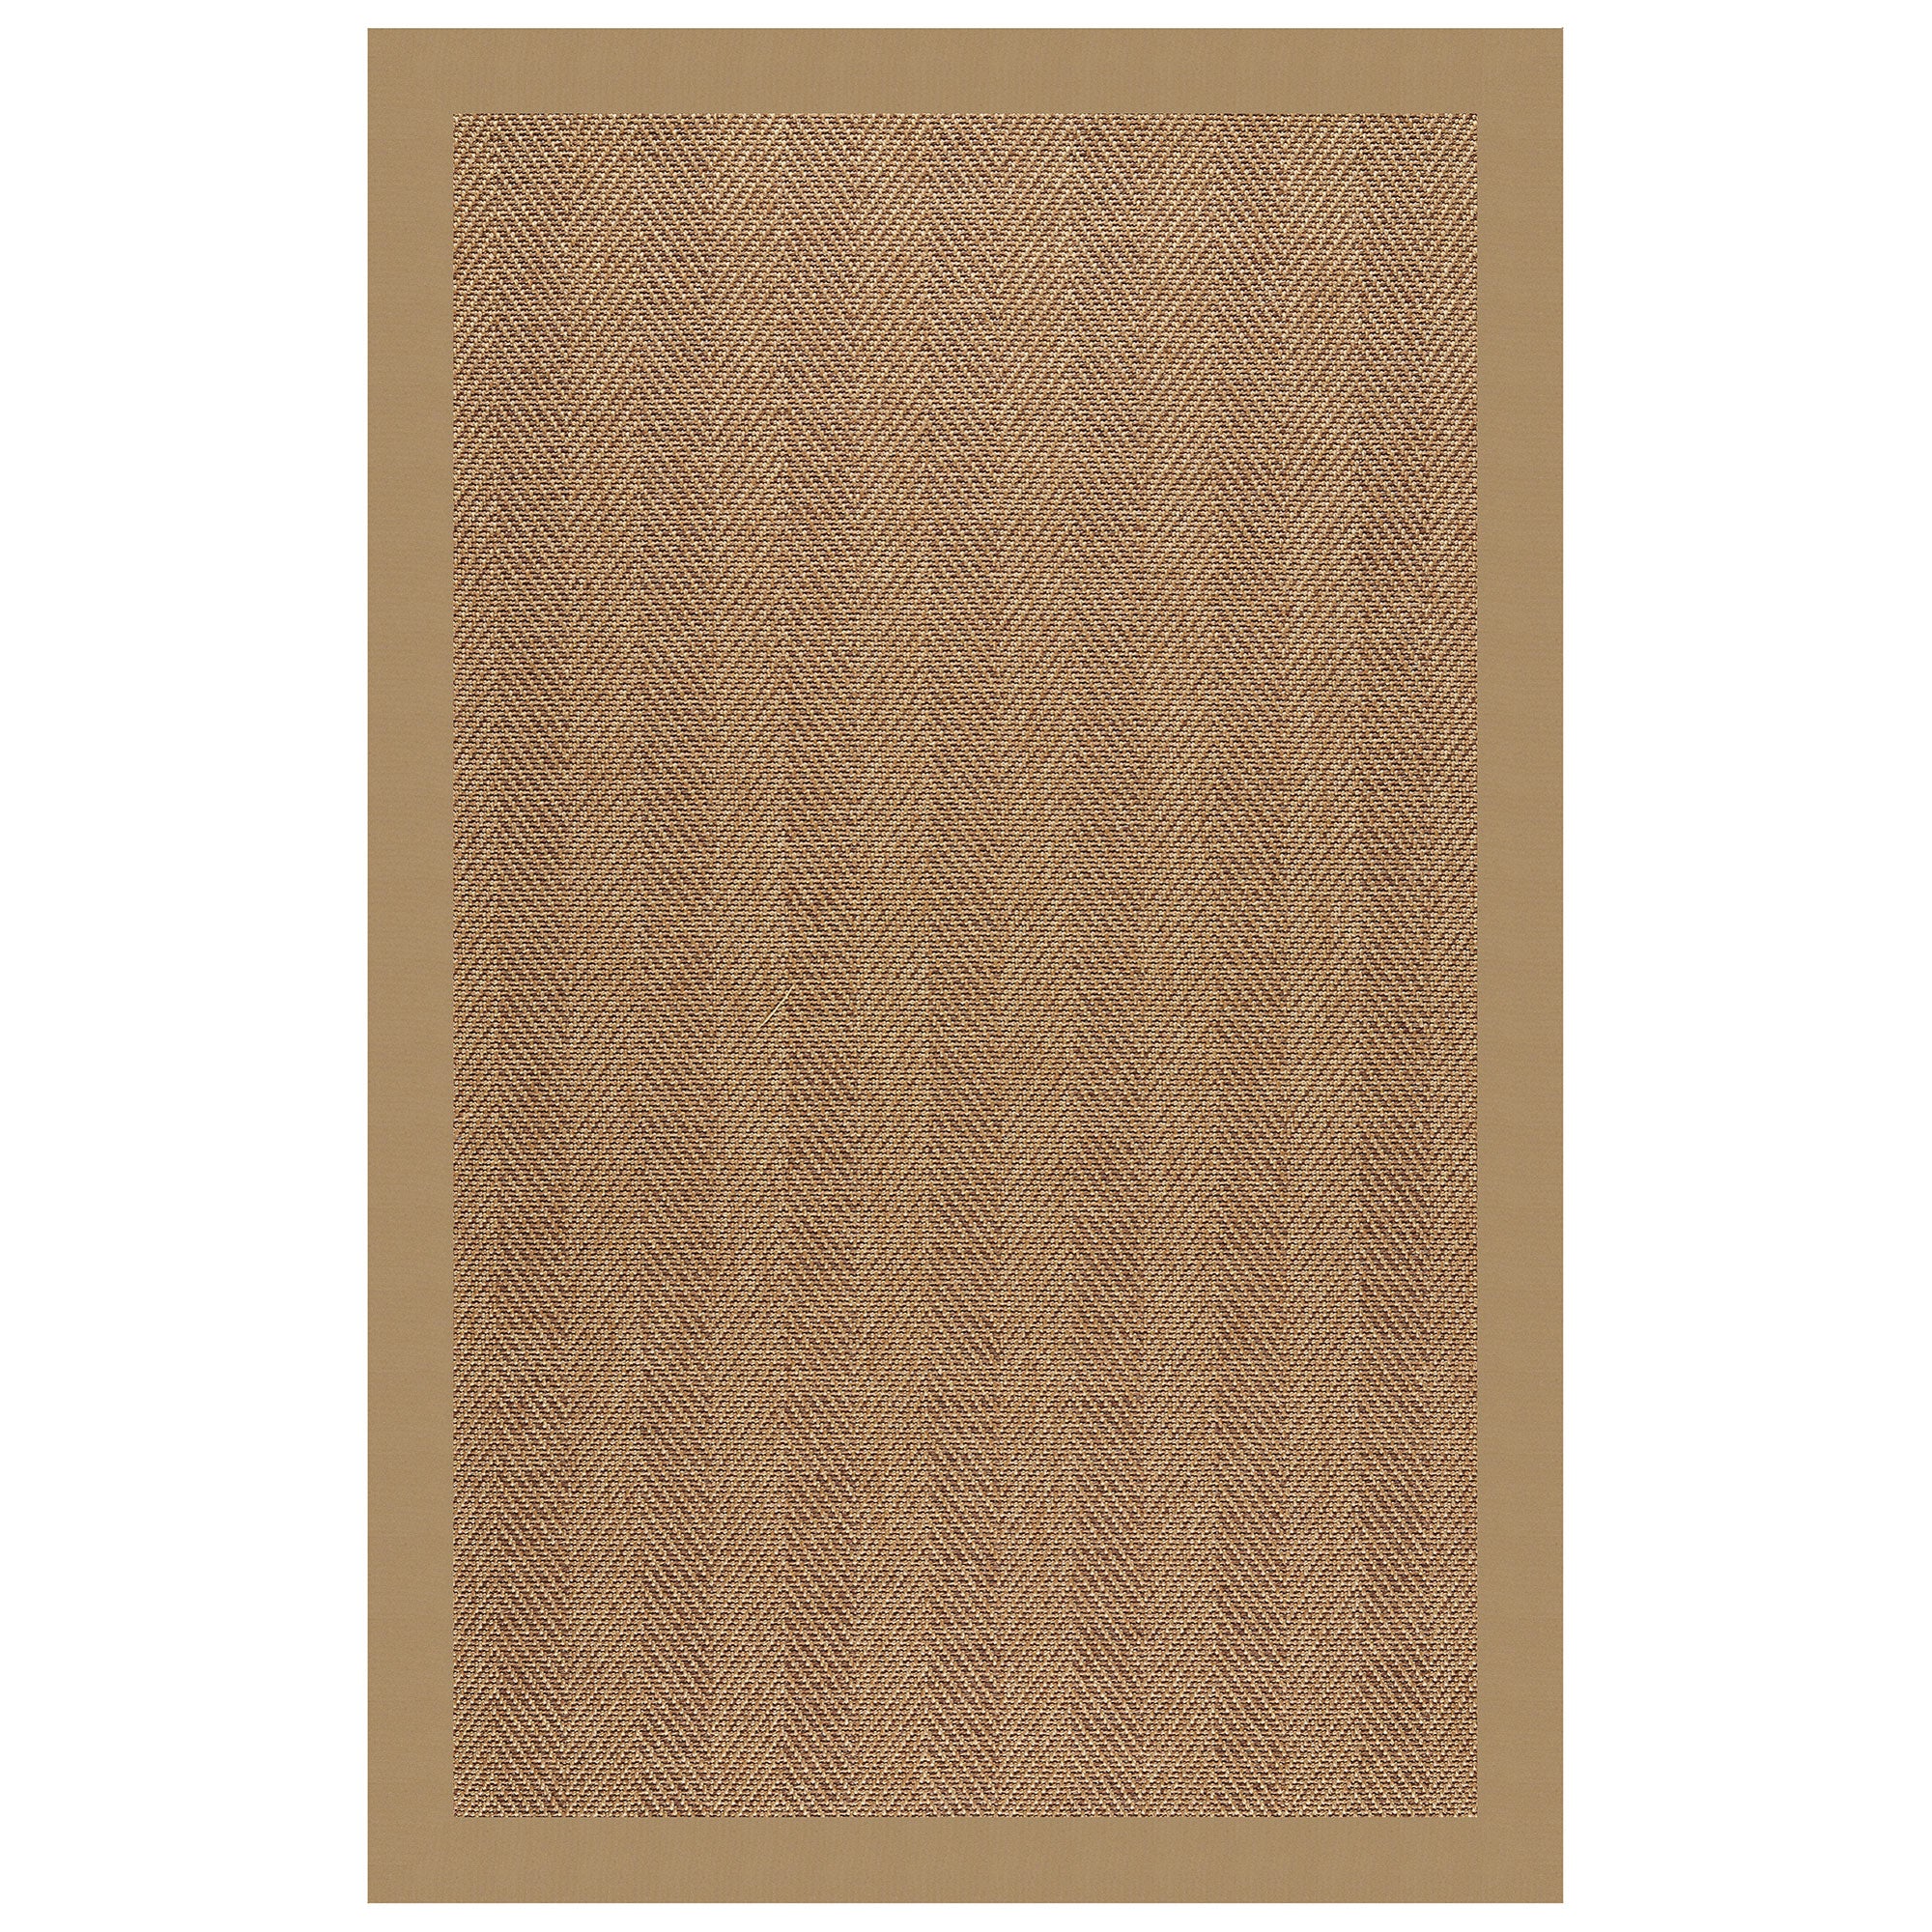 Islamorada-Herringbone Canvas Linen